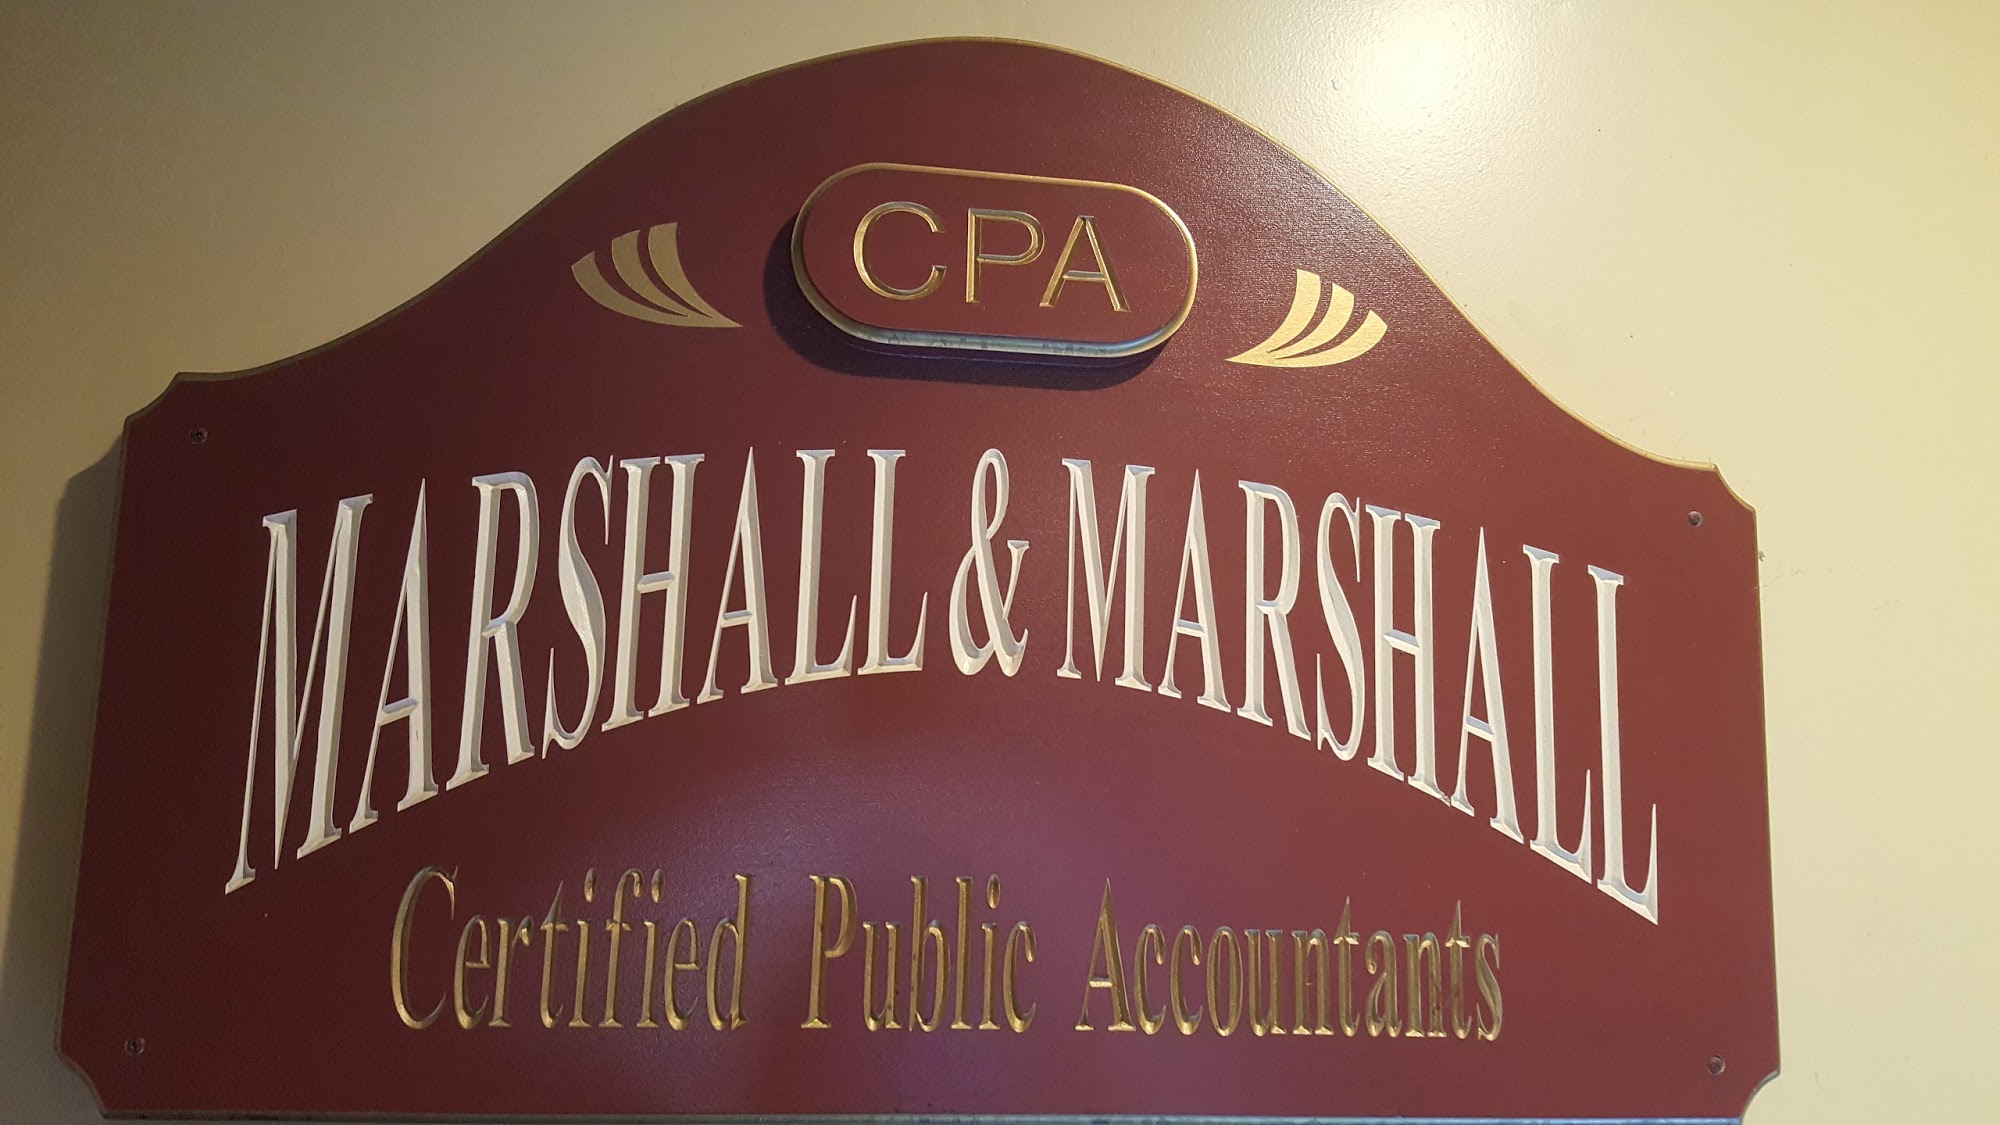 Marshall & Marshall, CPAs